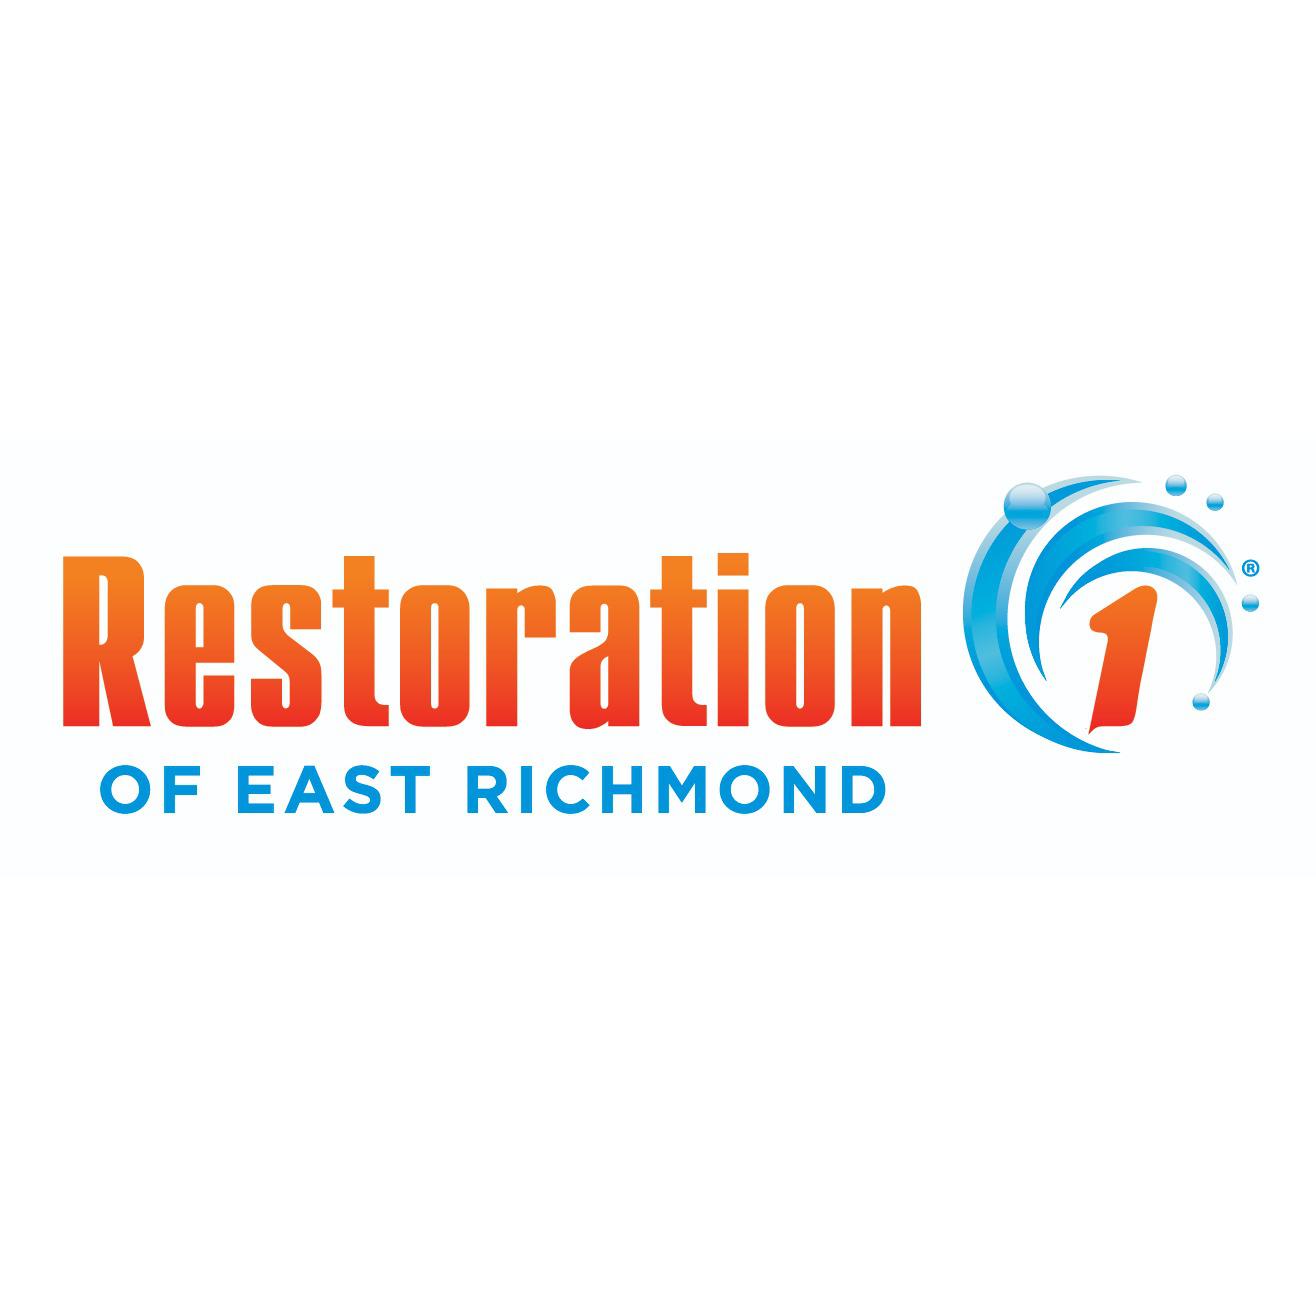 Restoration 1 of East Richmond